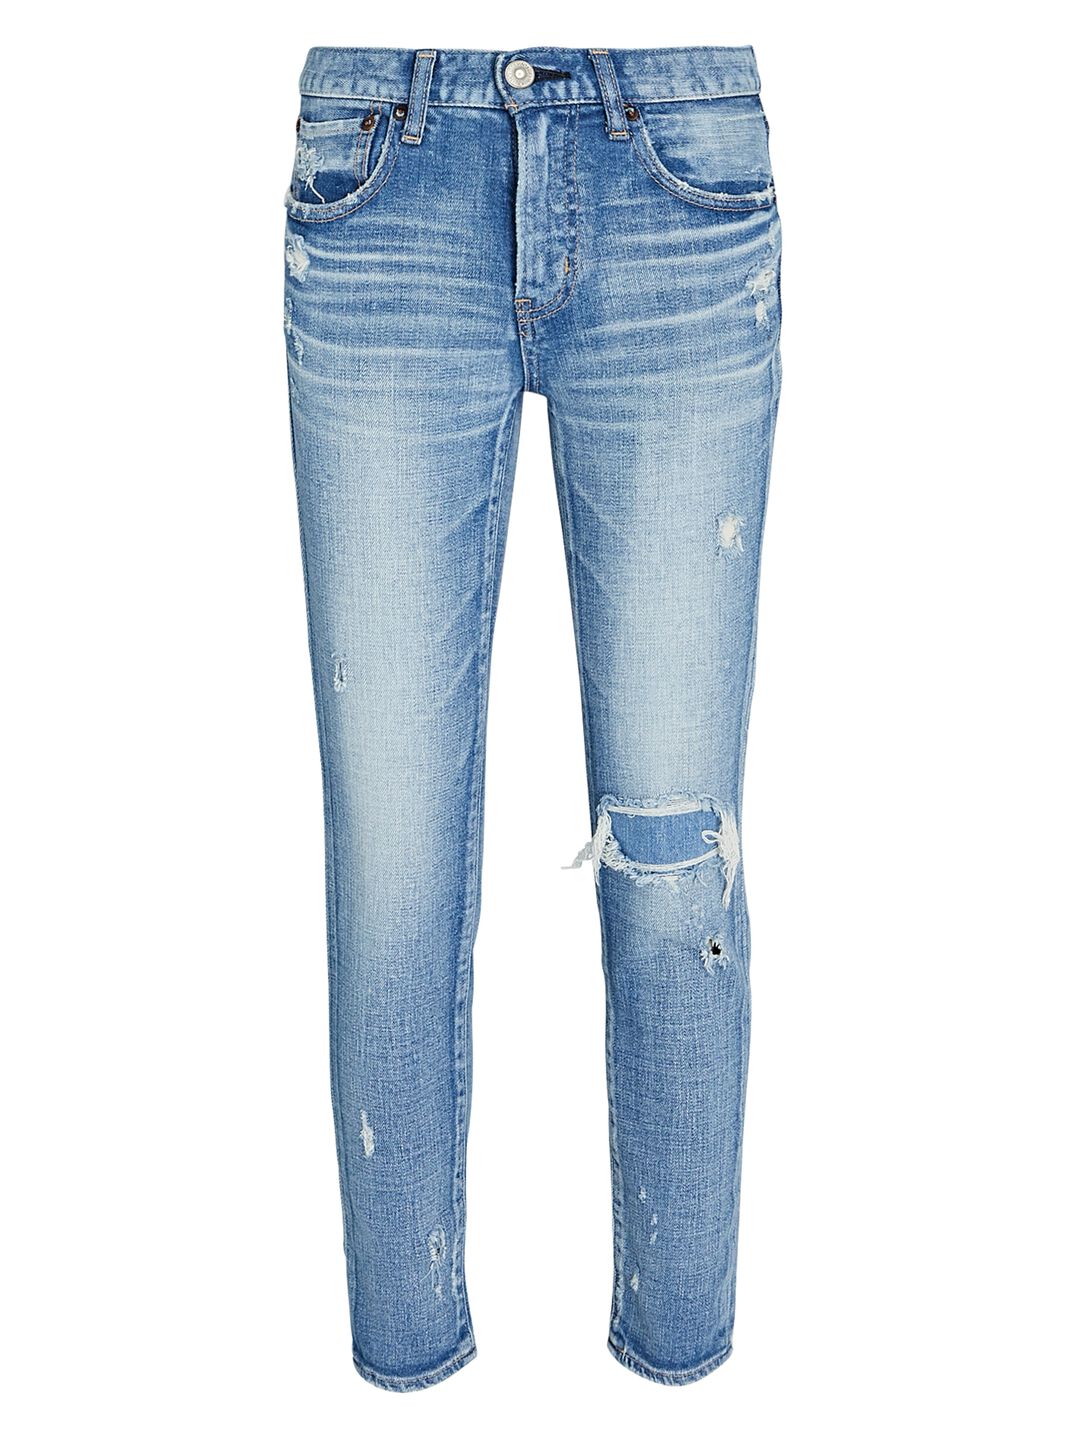 Lenwood Cropped Skinny Jeans